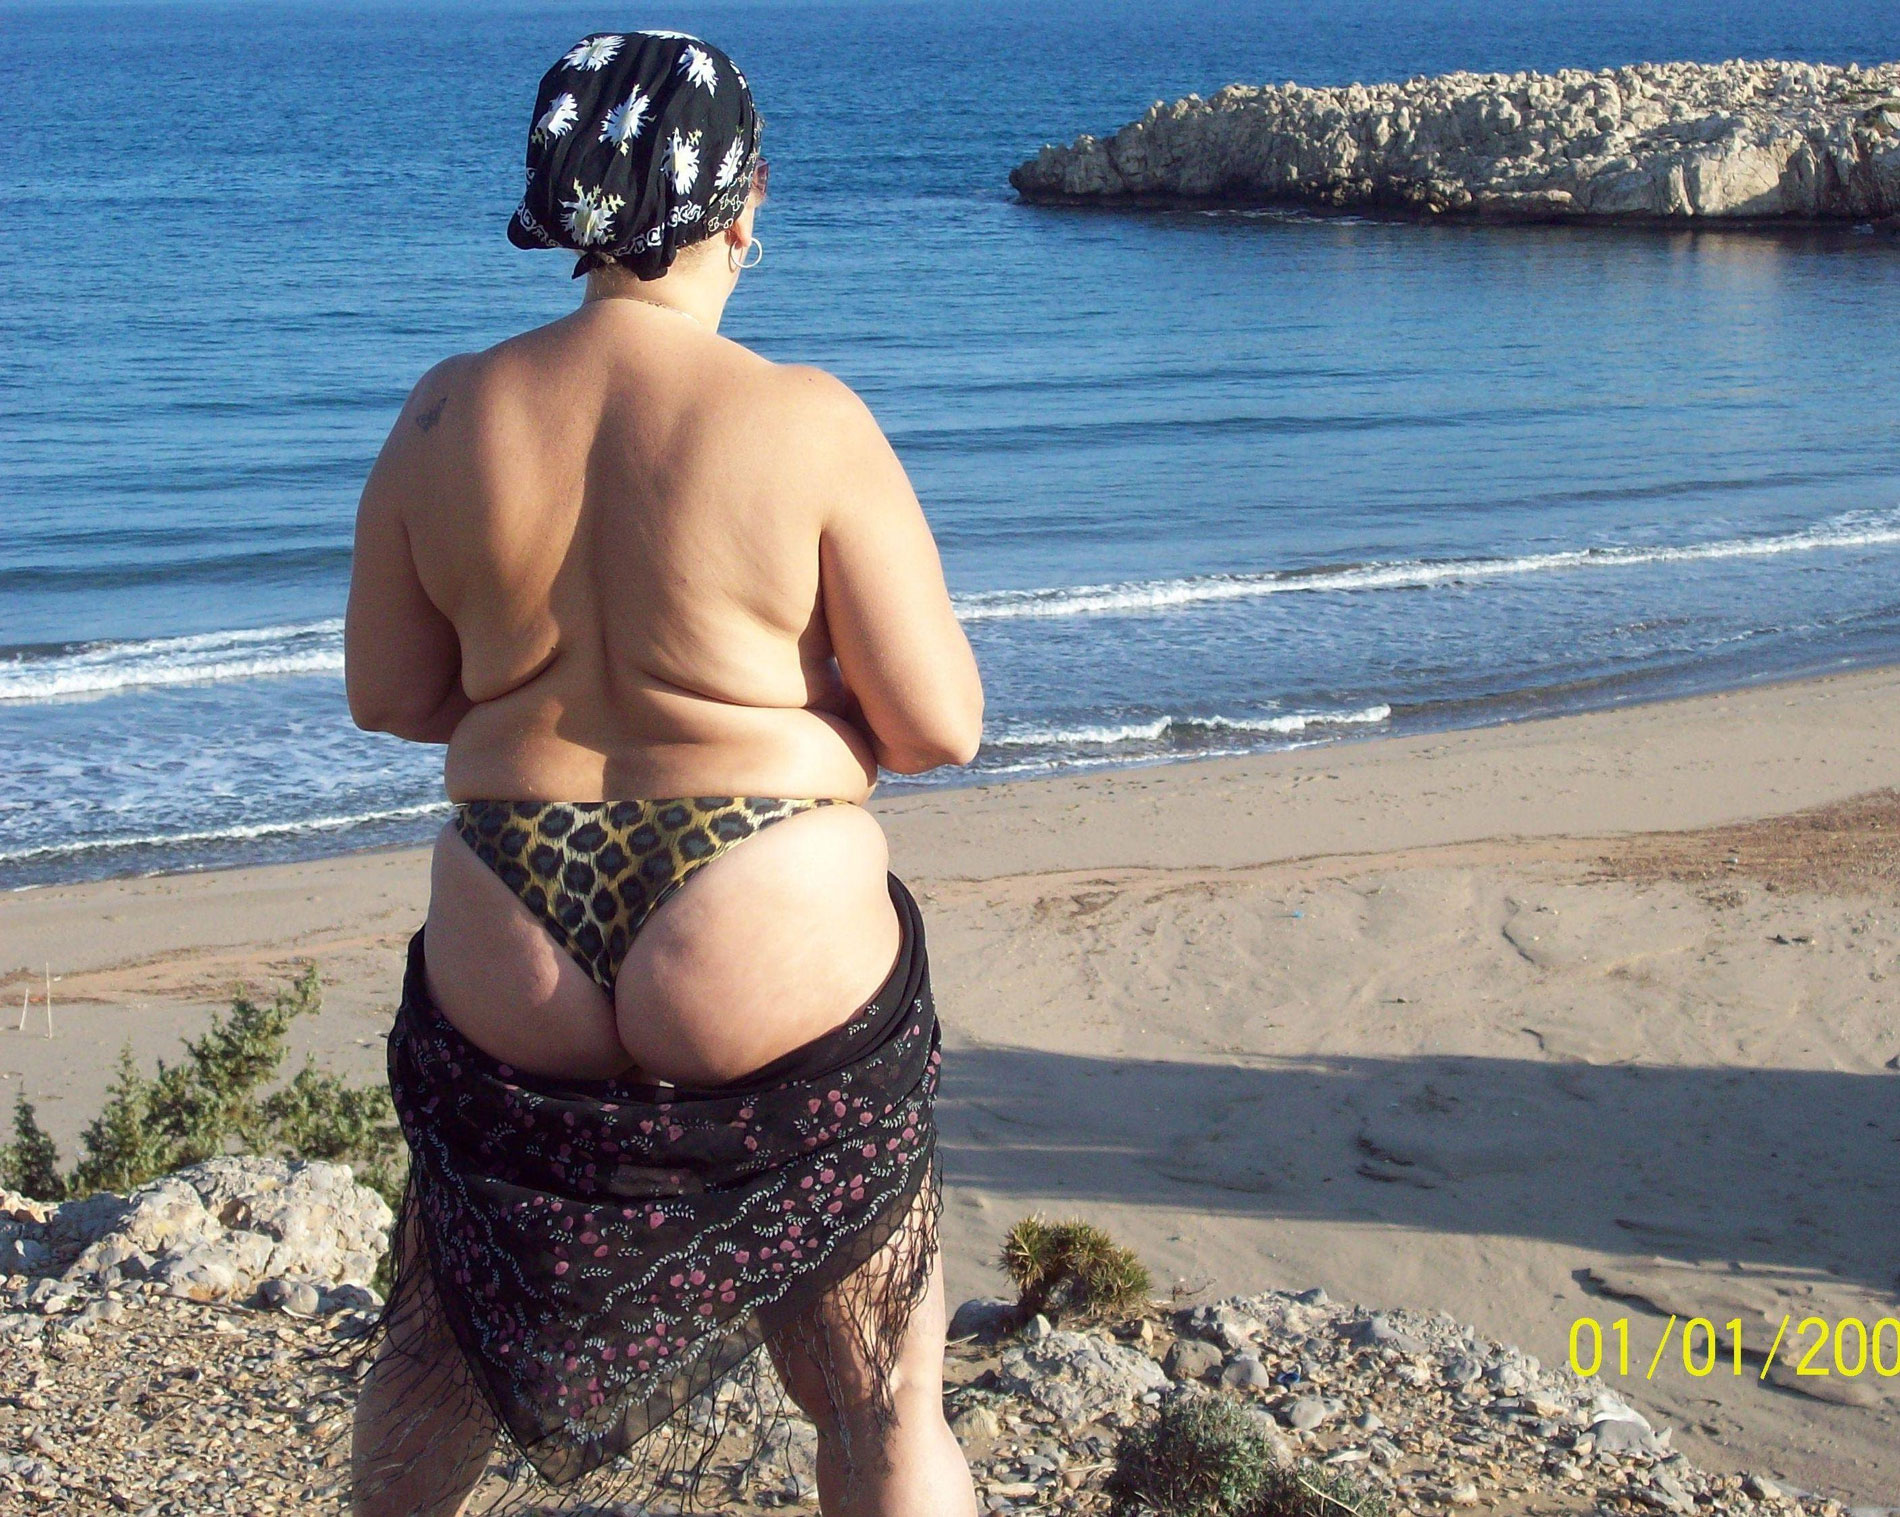 Fat Mom Nude Beach - Fat nudist moms and grannies sunbathing nude on beach